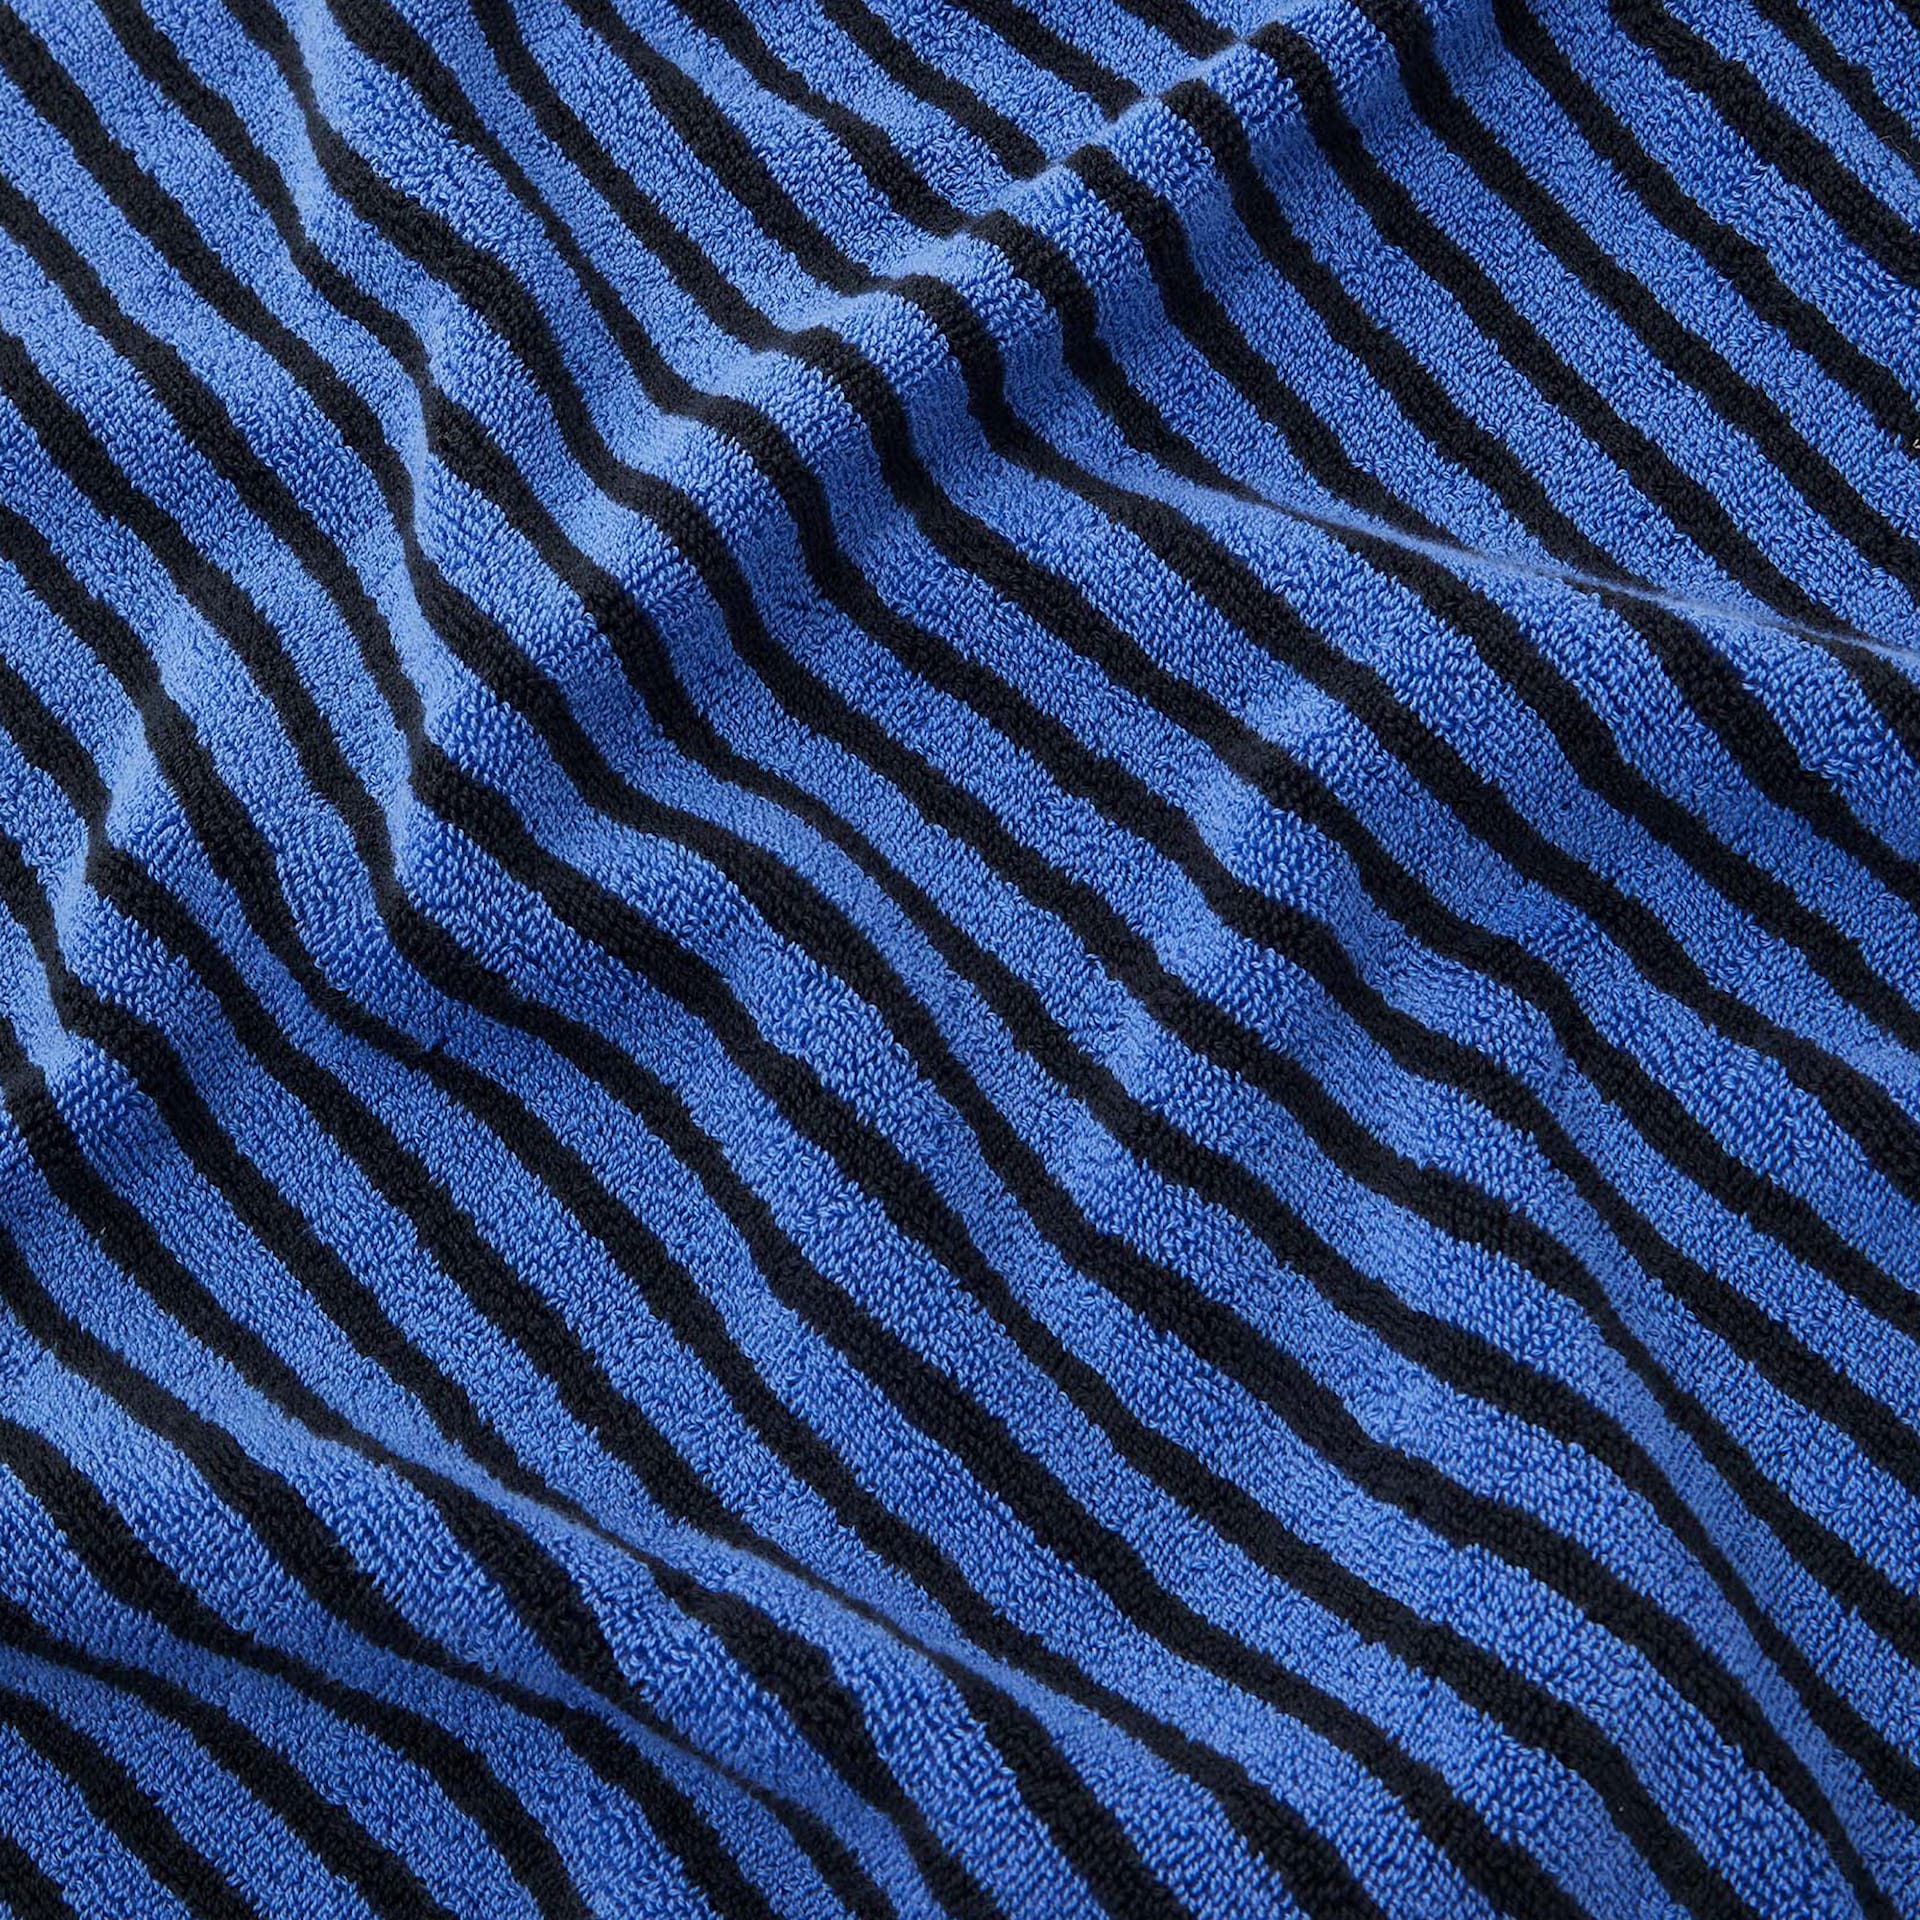 Terry Towel Black & Blue Stripes - TEKLA - NO GA